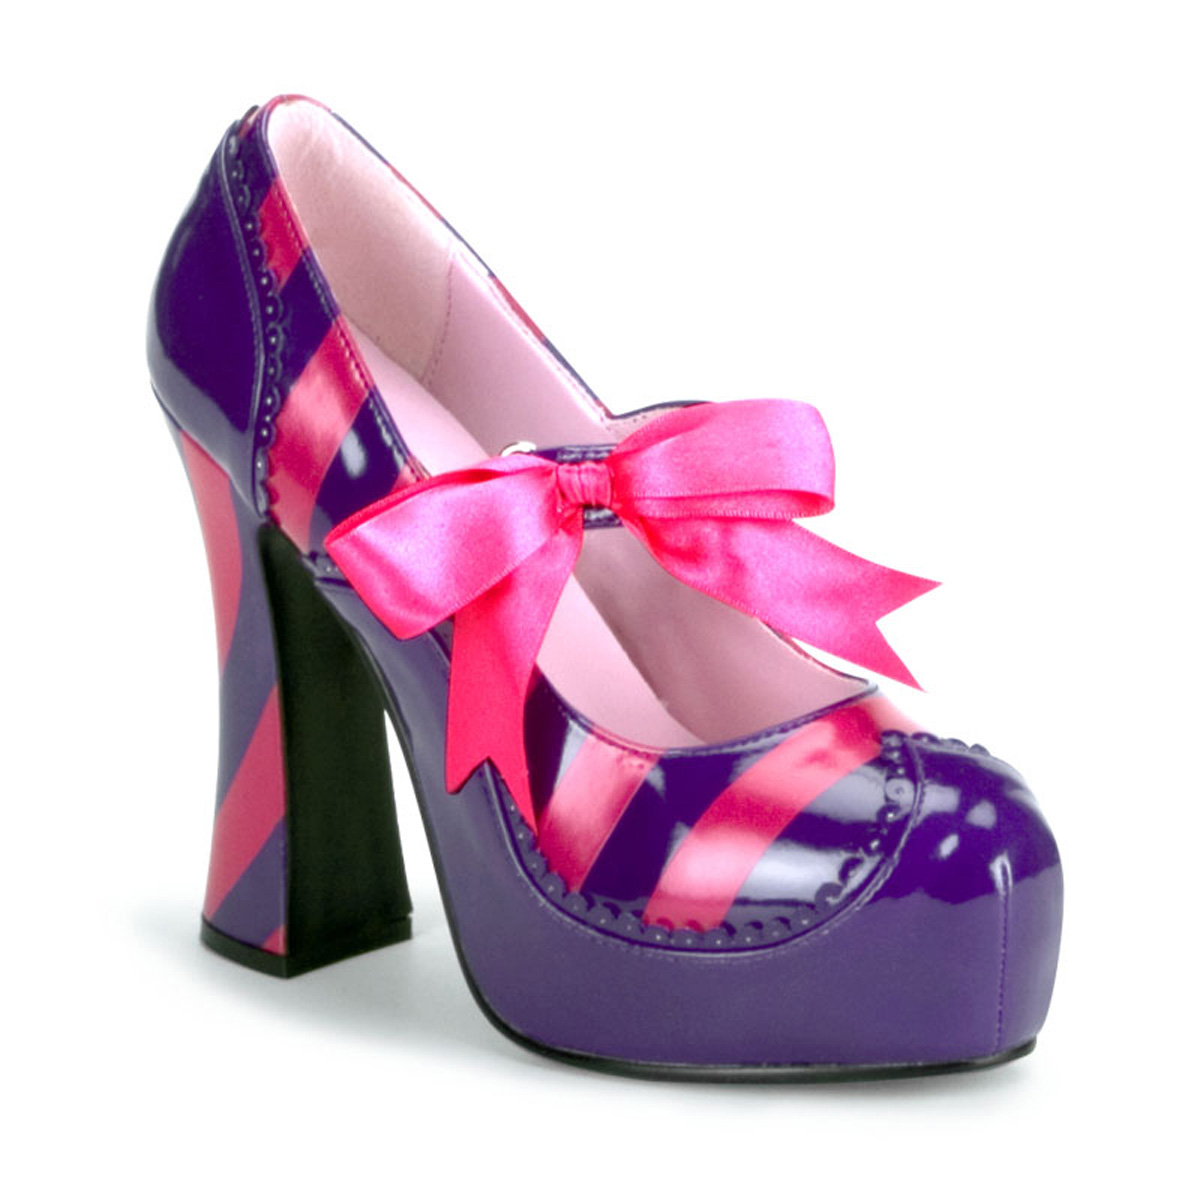 Cheschire cat chunky heel Alice wonderland 5" costume shoes